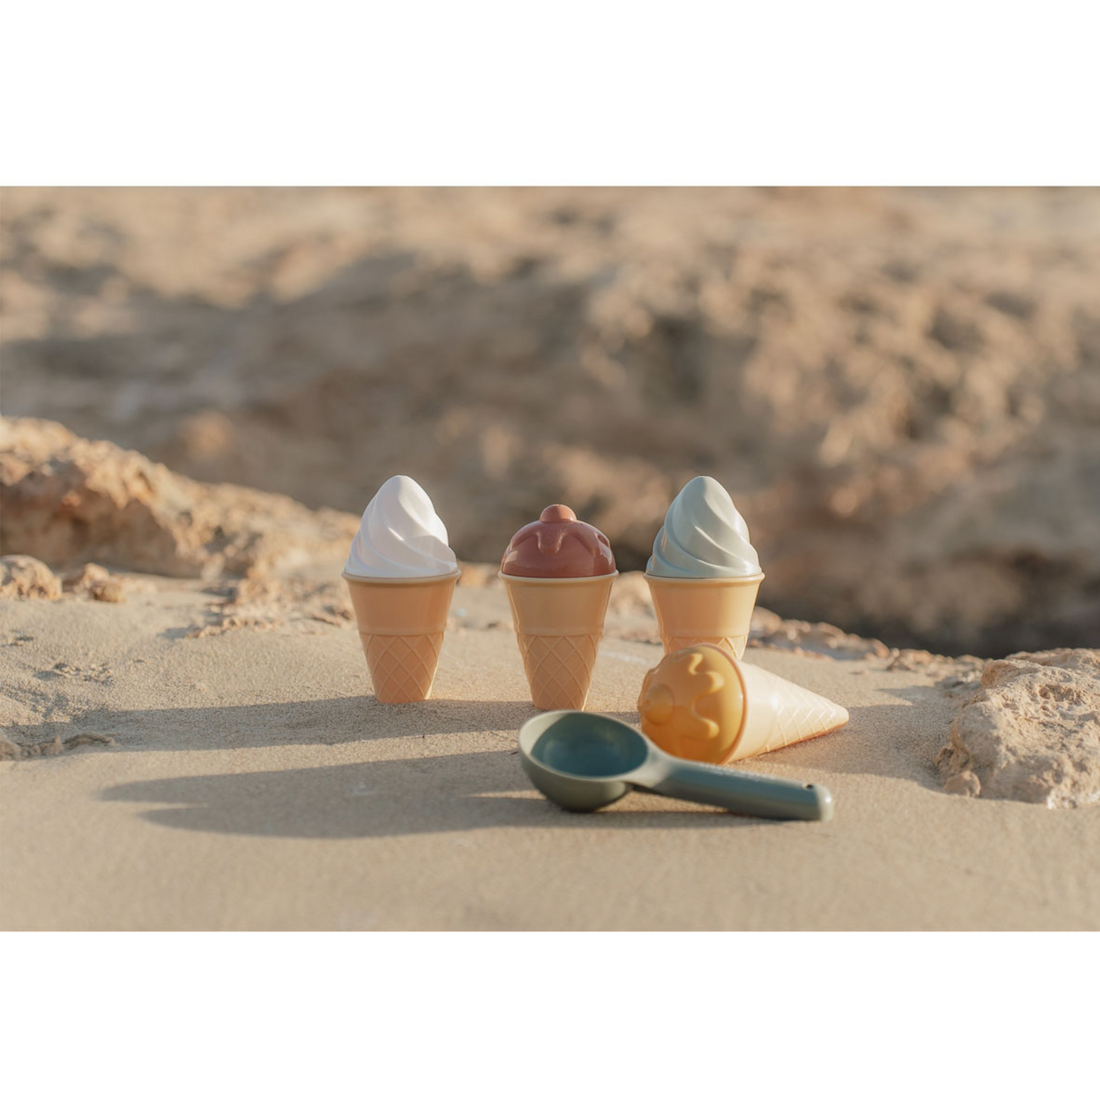 Sand toys - ice cream making set small 